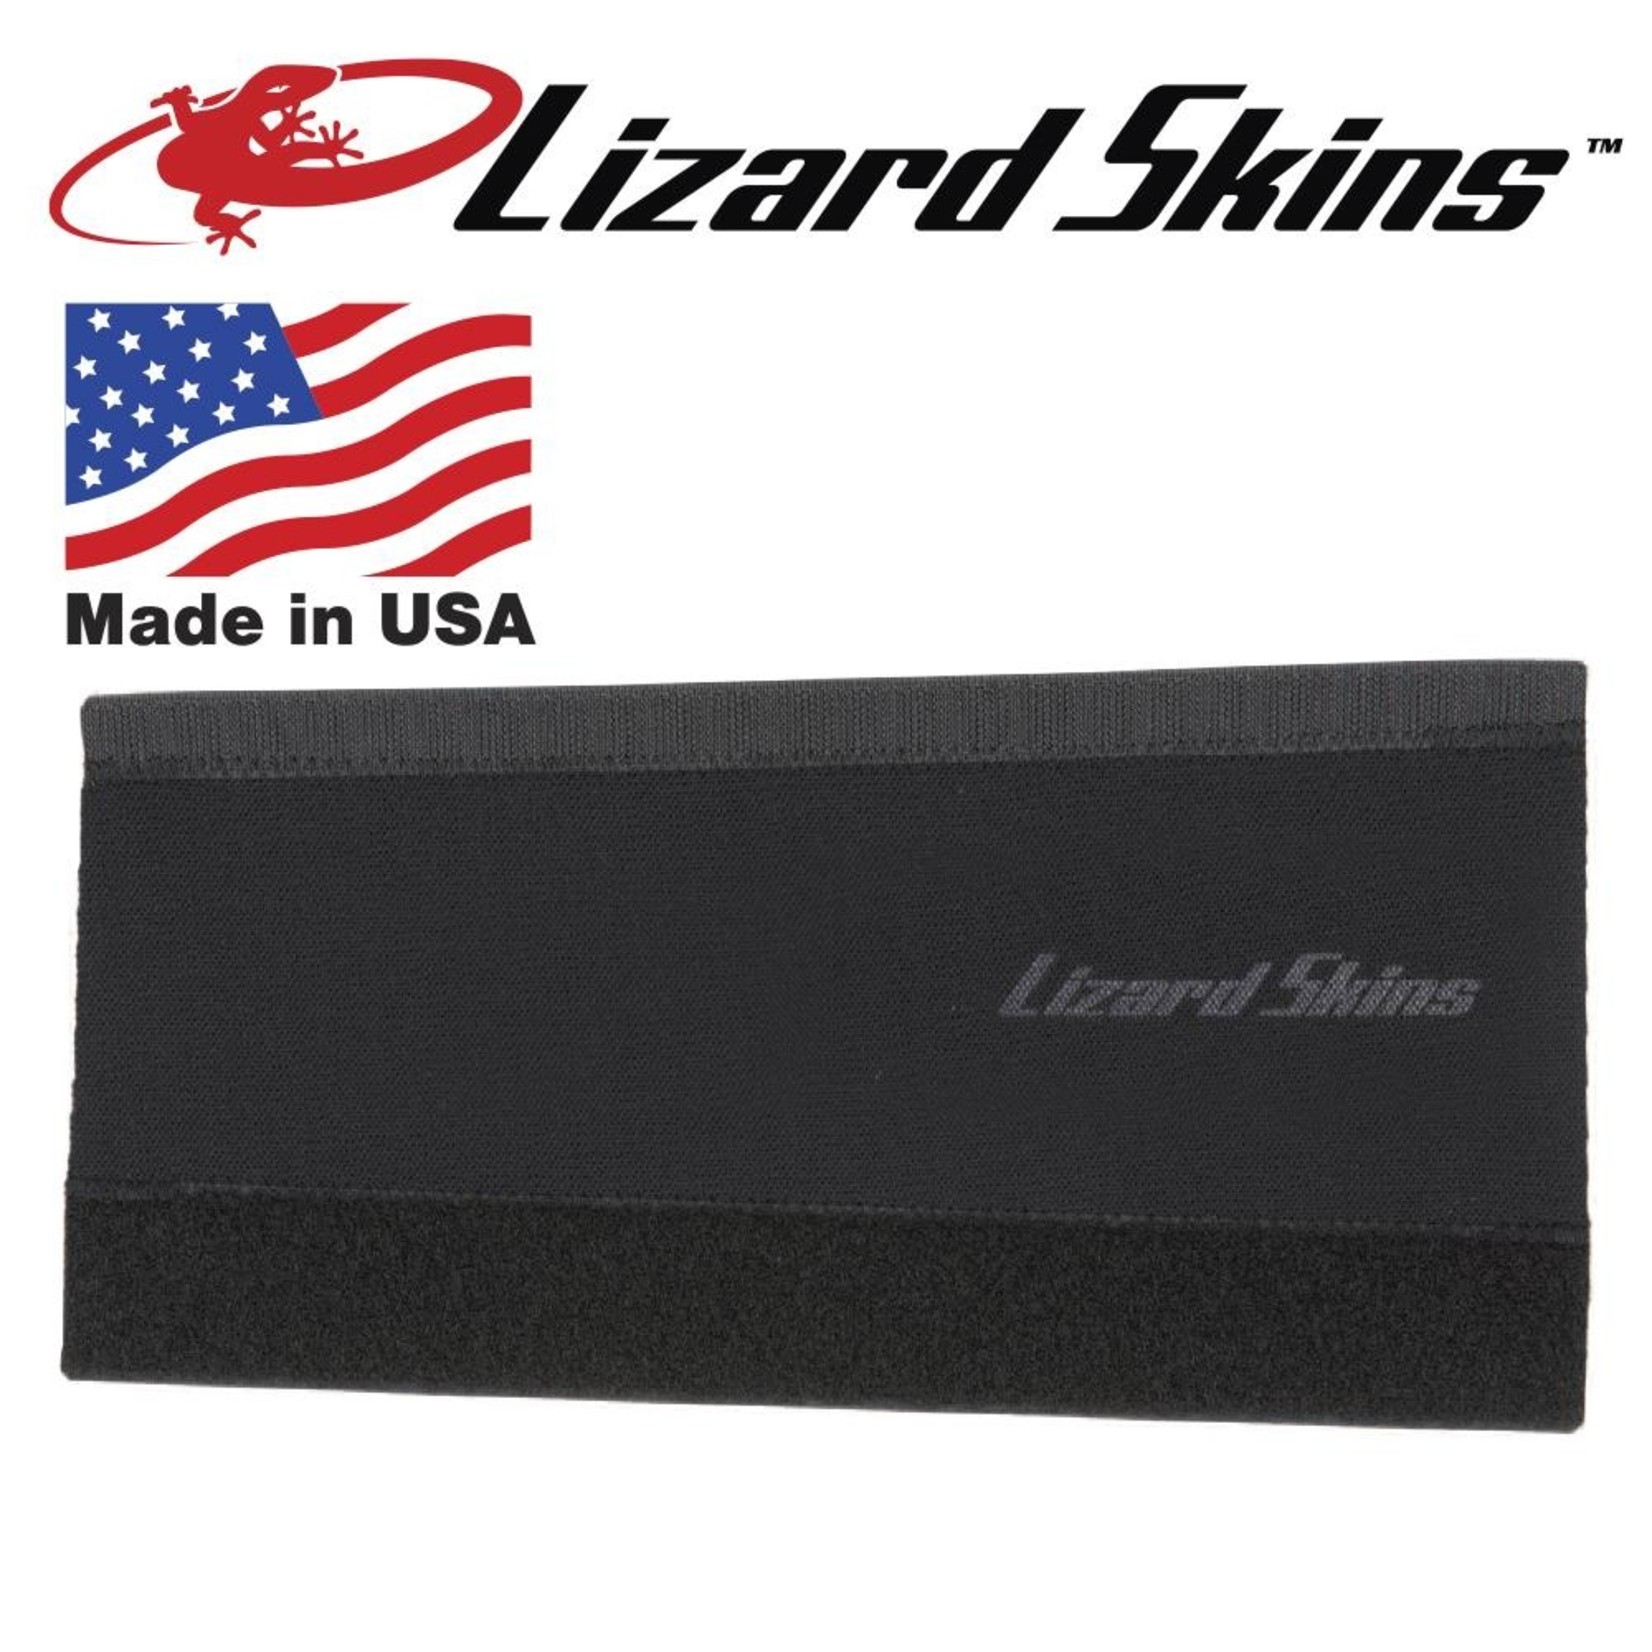 Lizard Skin Lizard Skins Neoprene Chainstay Protectors - 280mm - Large - Black